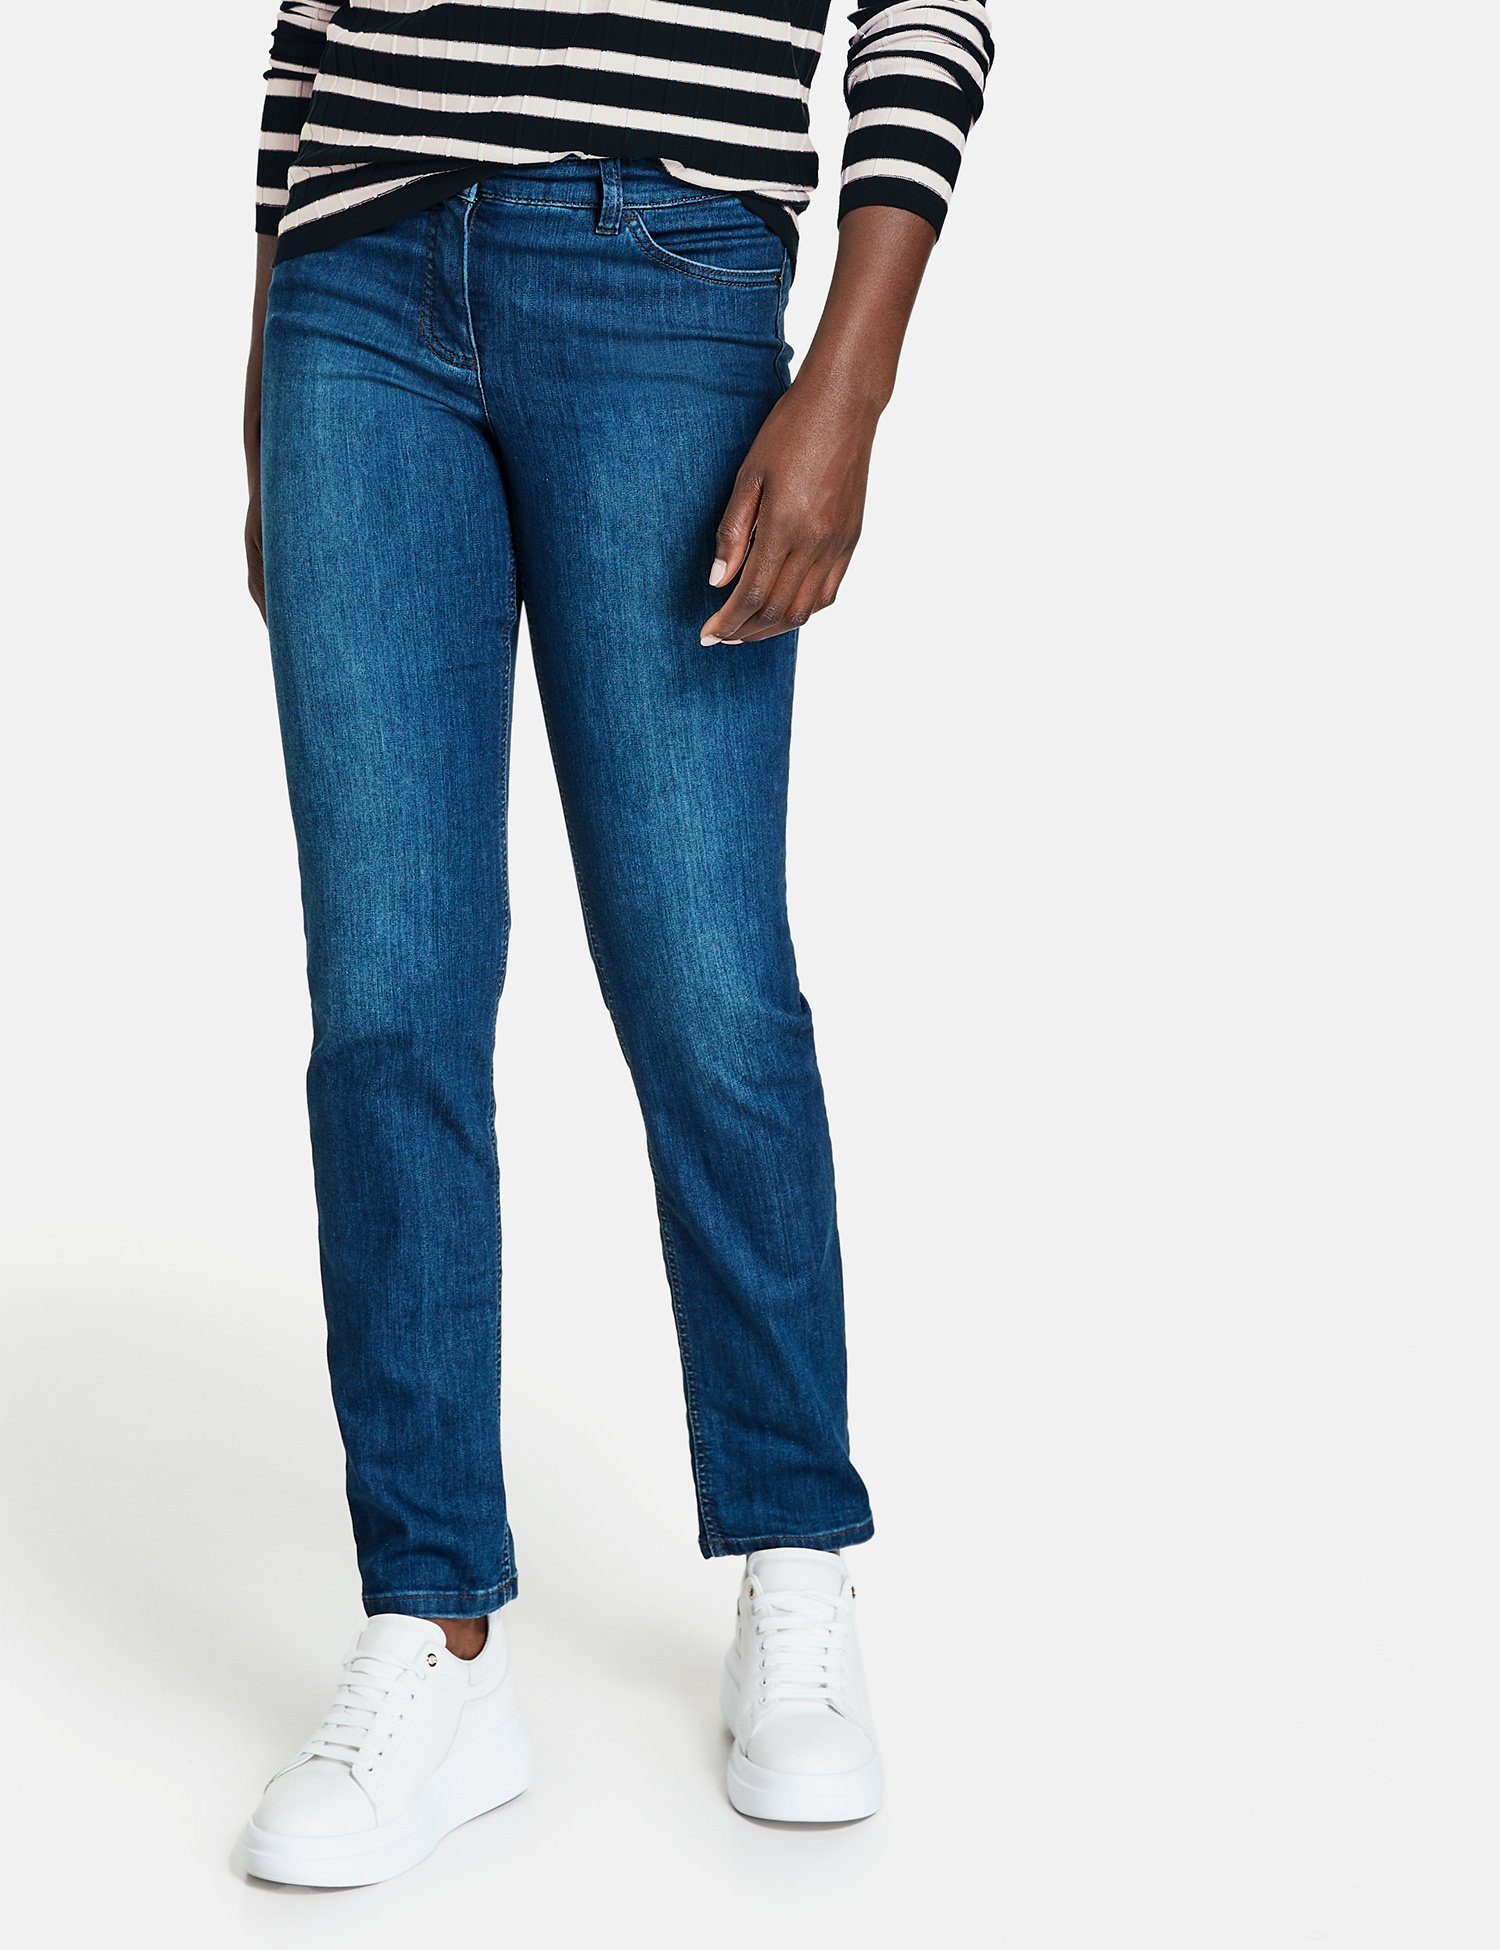 Jeans 5-Pocket WEBER Slimfit Best4me dark blue use mit Stretch-Jeans denim GERRY